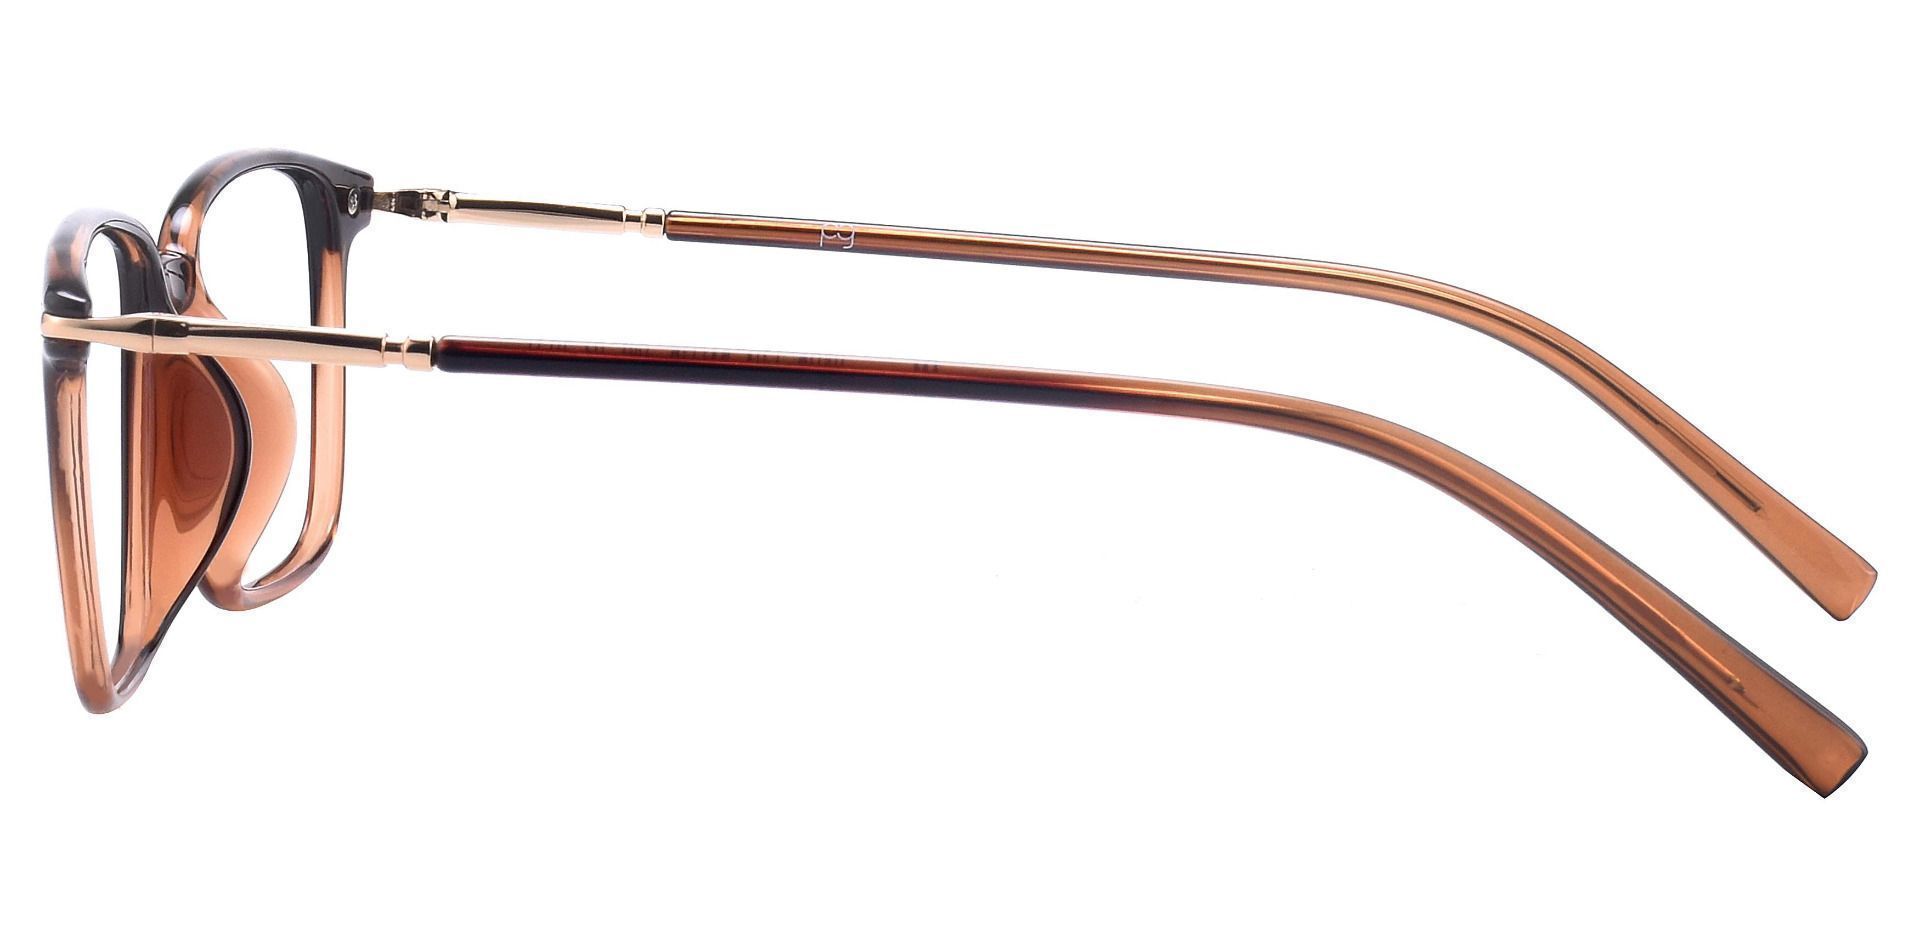 Surrey Rectangle Progressive Glasses - Brown